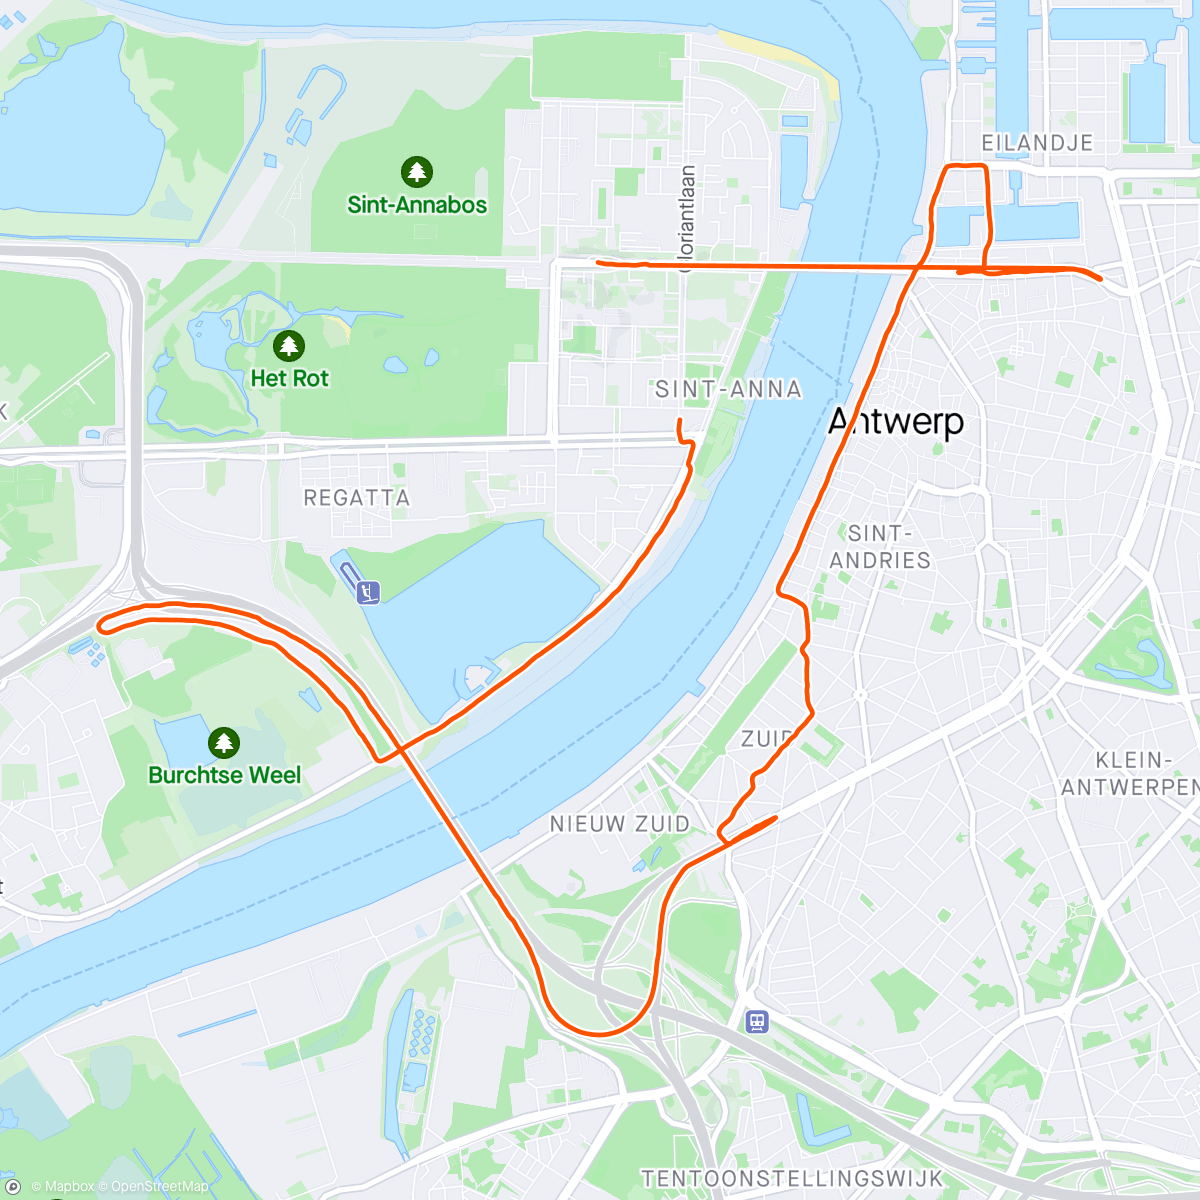 Map of the activity, Antwerp 10 miles 2024